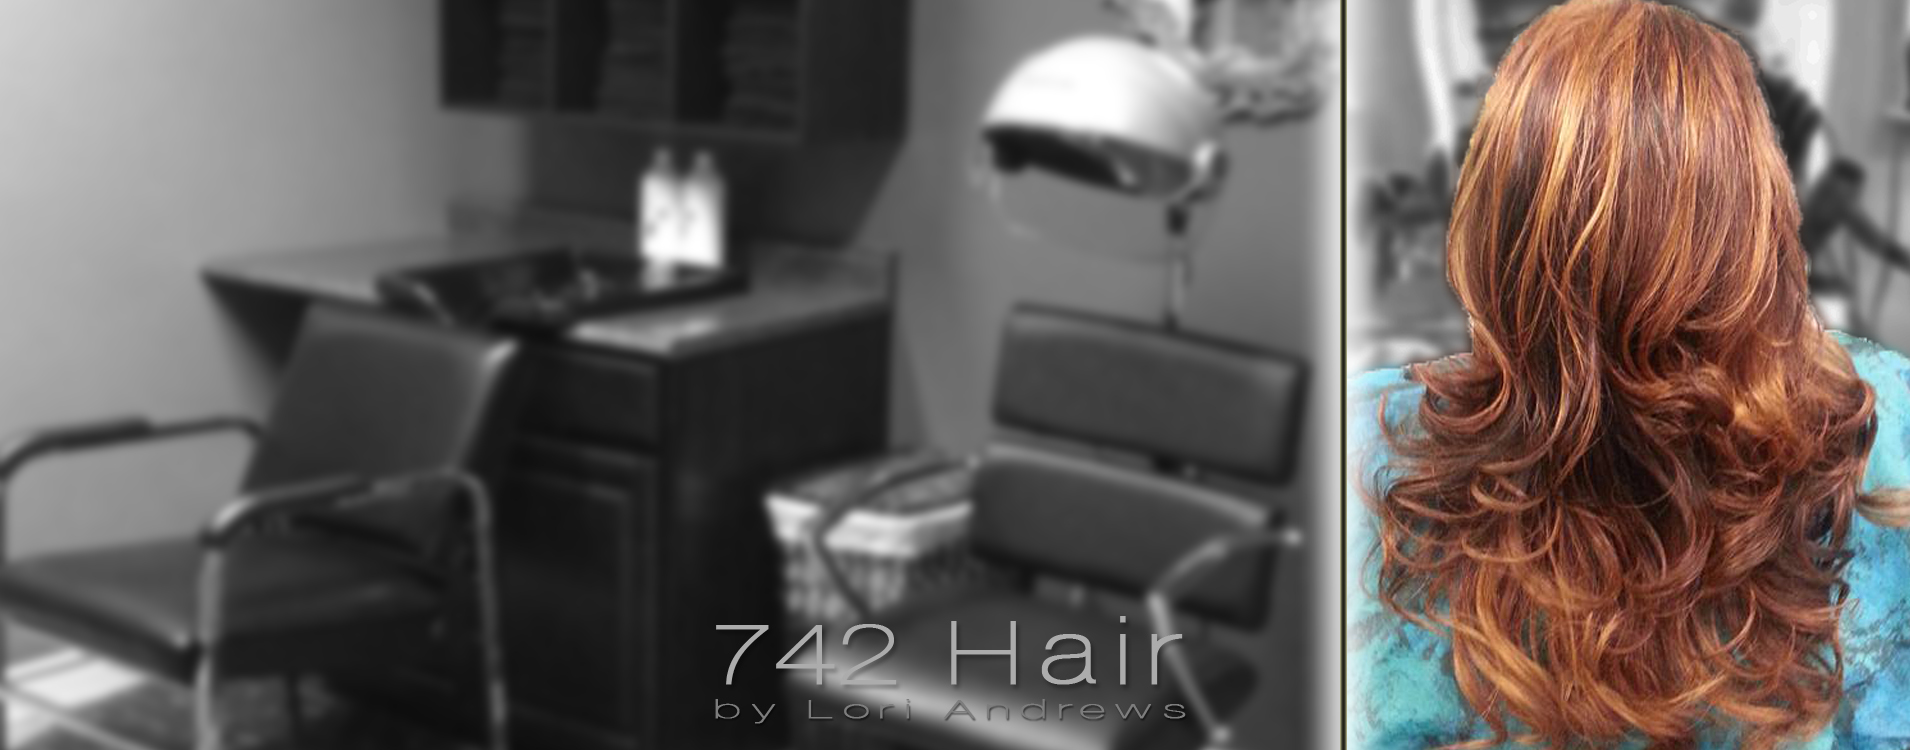 742 Hair - by Lori Andrews | Hair Salon in Pinellas Park, St Pete,  Clearwater FL